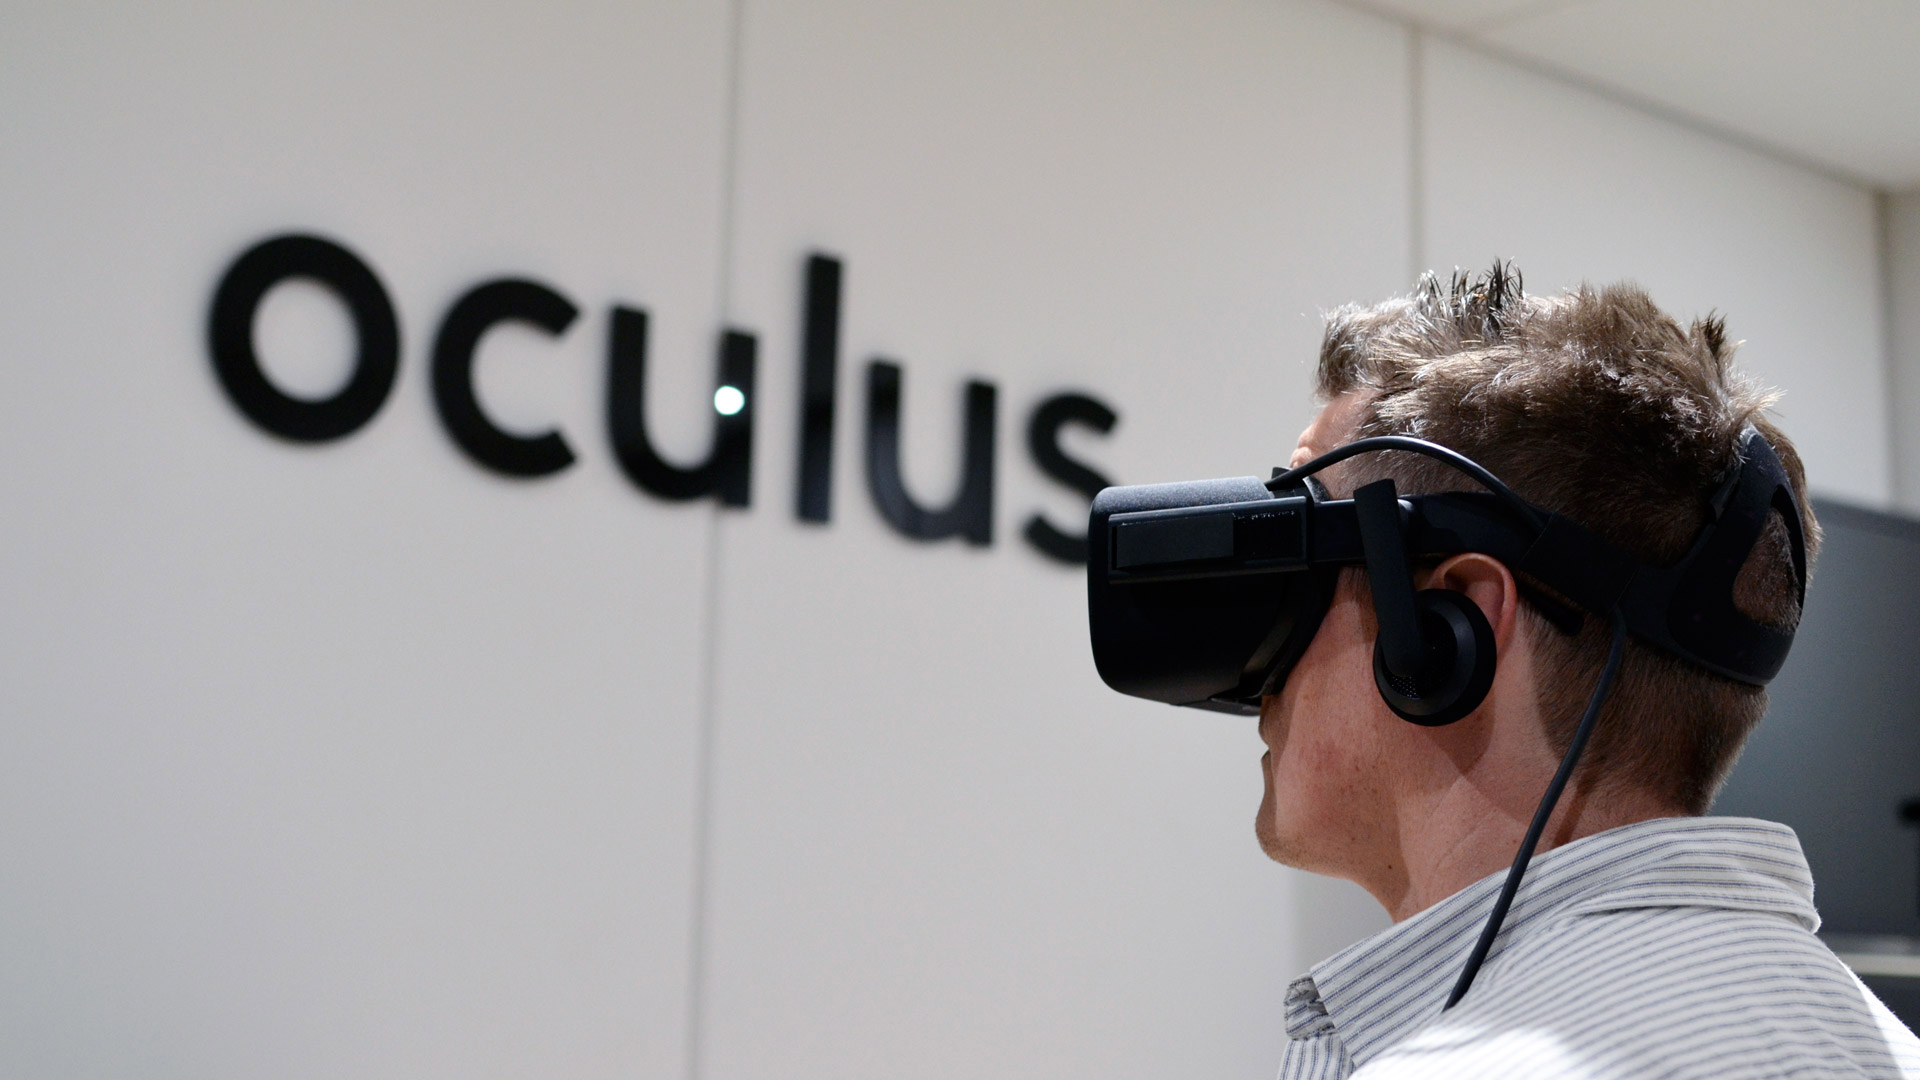 upcoming oculus